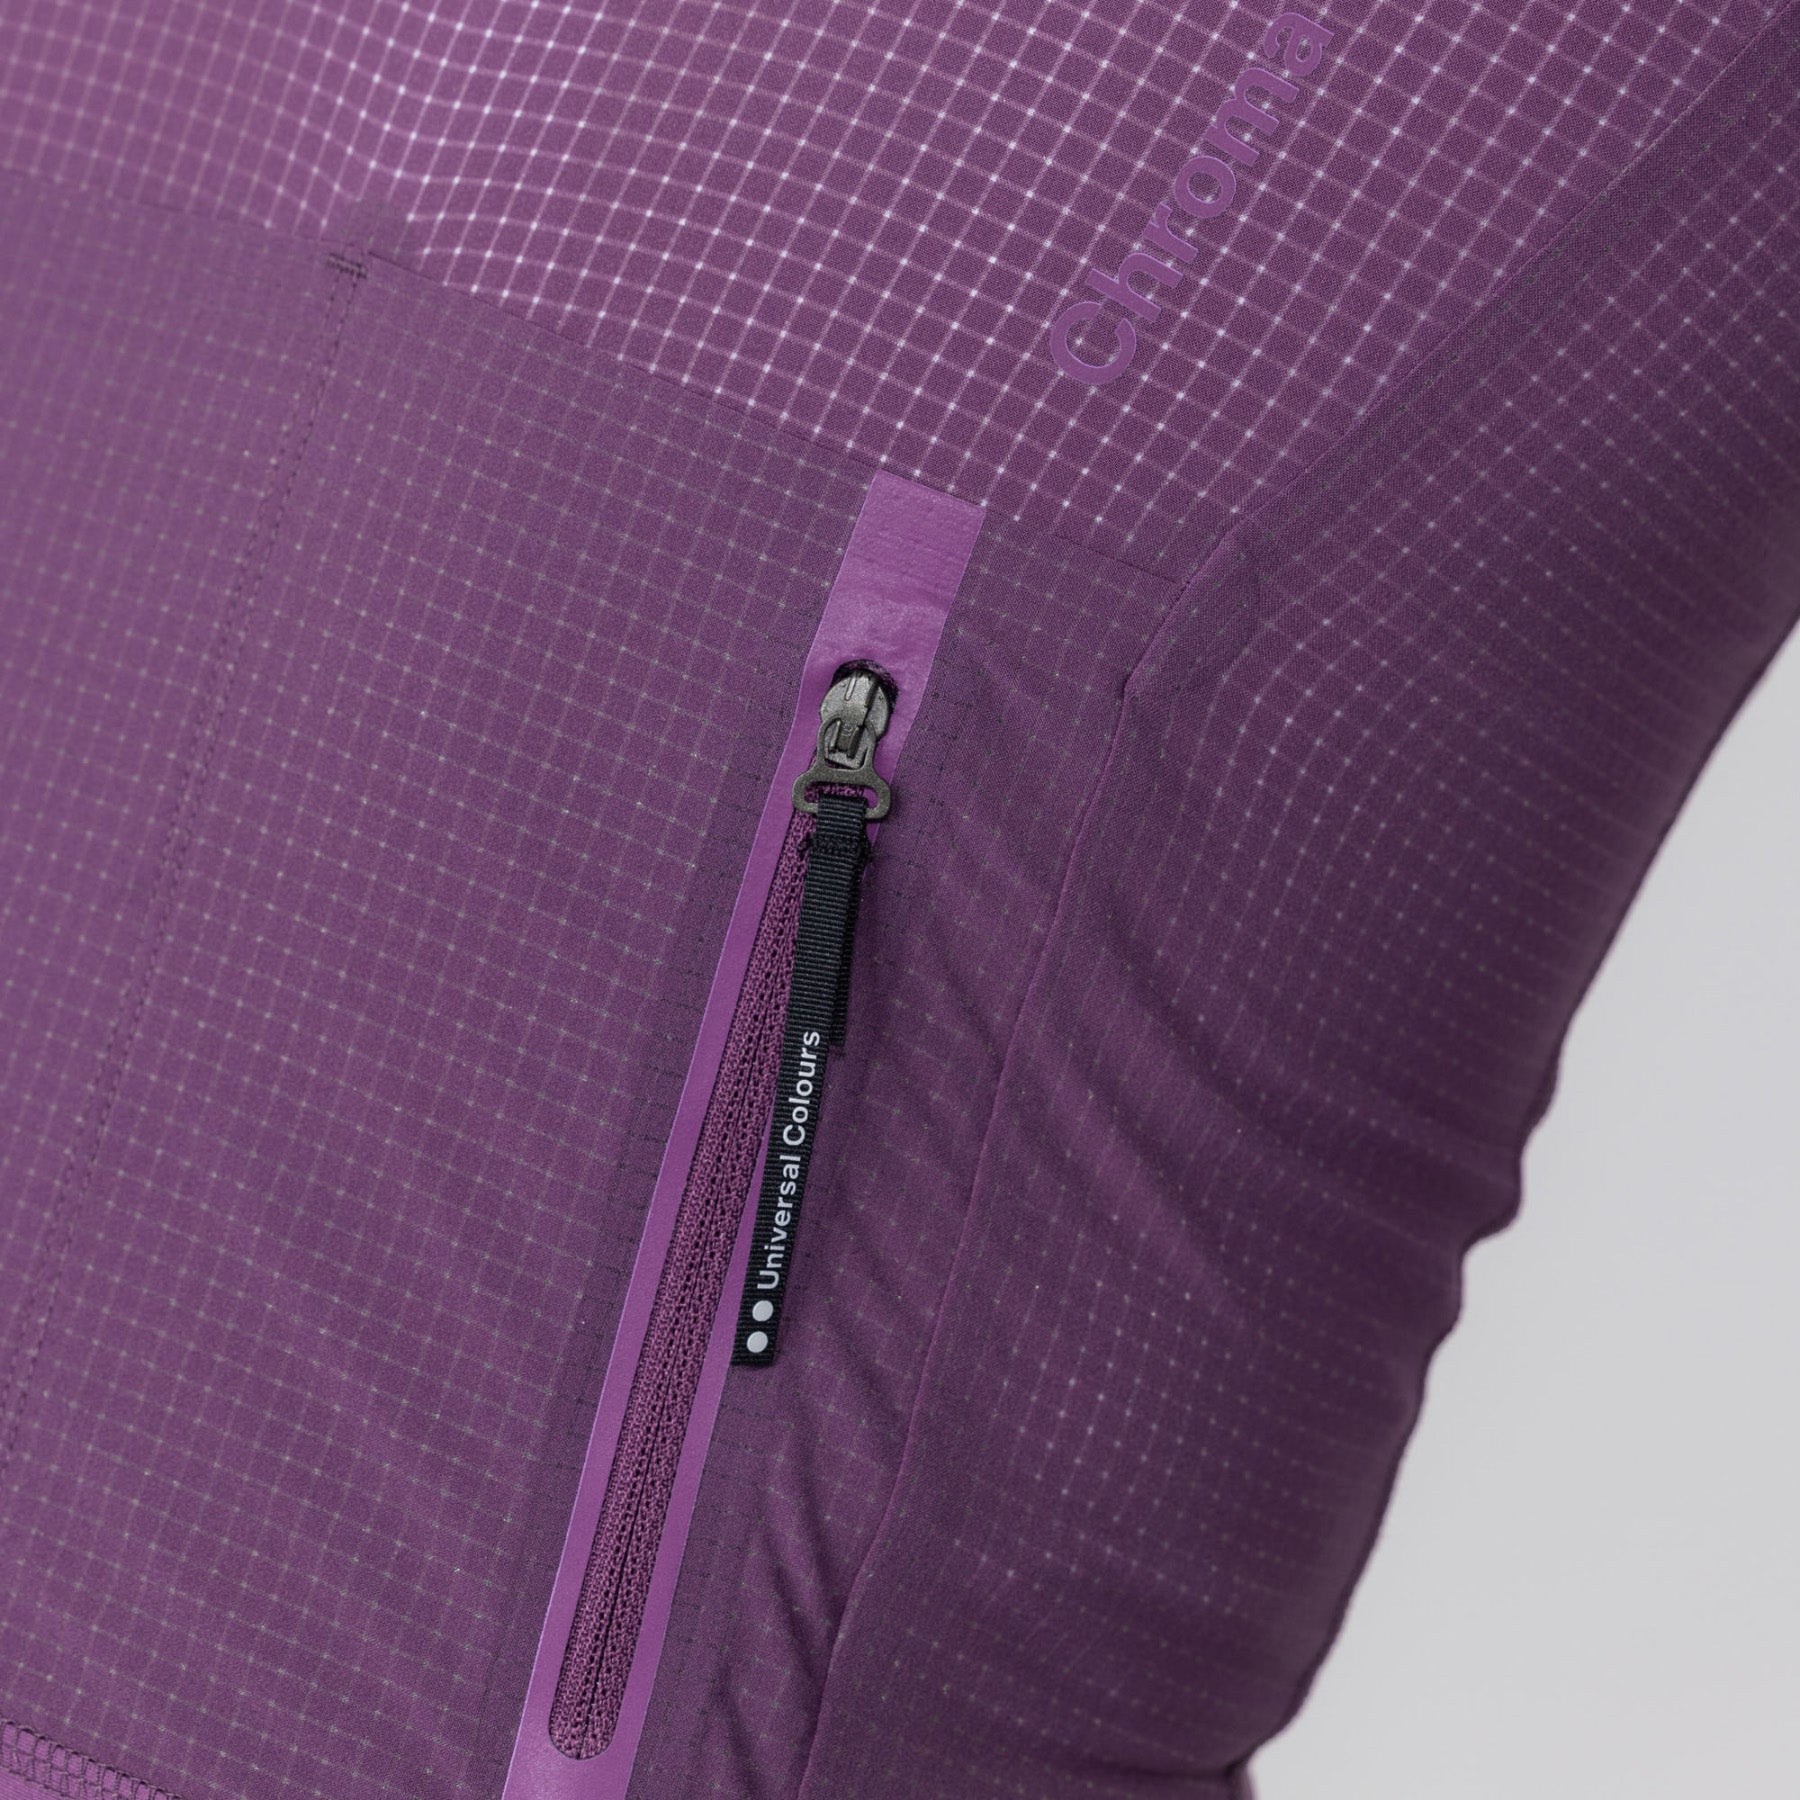 Chroma Short Sleeve Jersey - Berry Purple